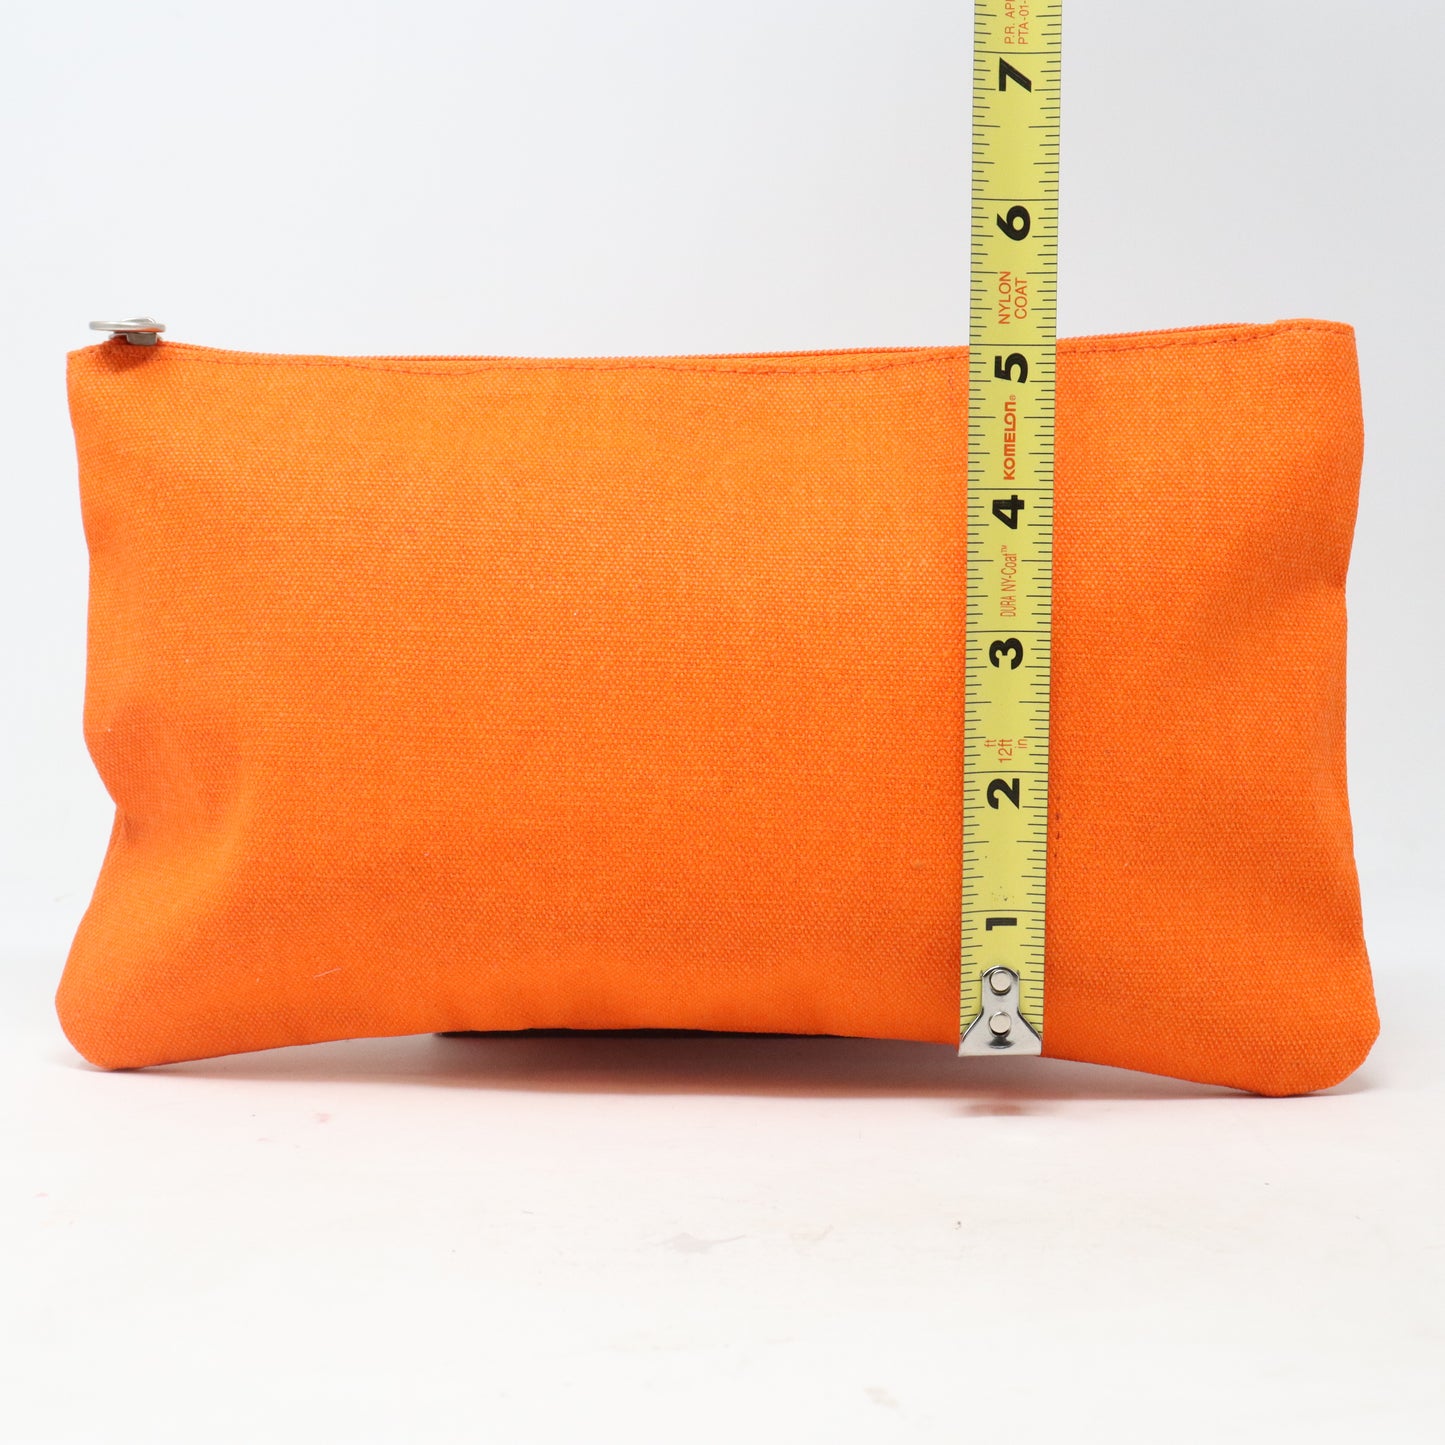 Origins Orange Cosmetic Bag  / New